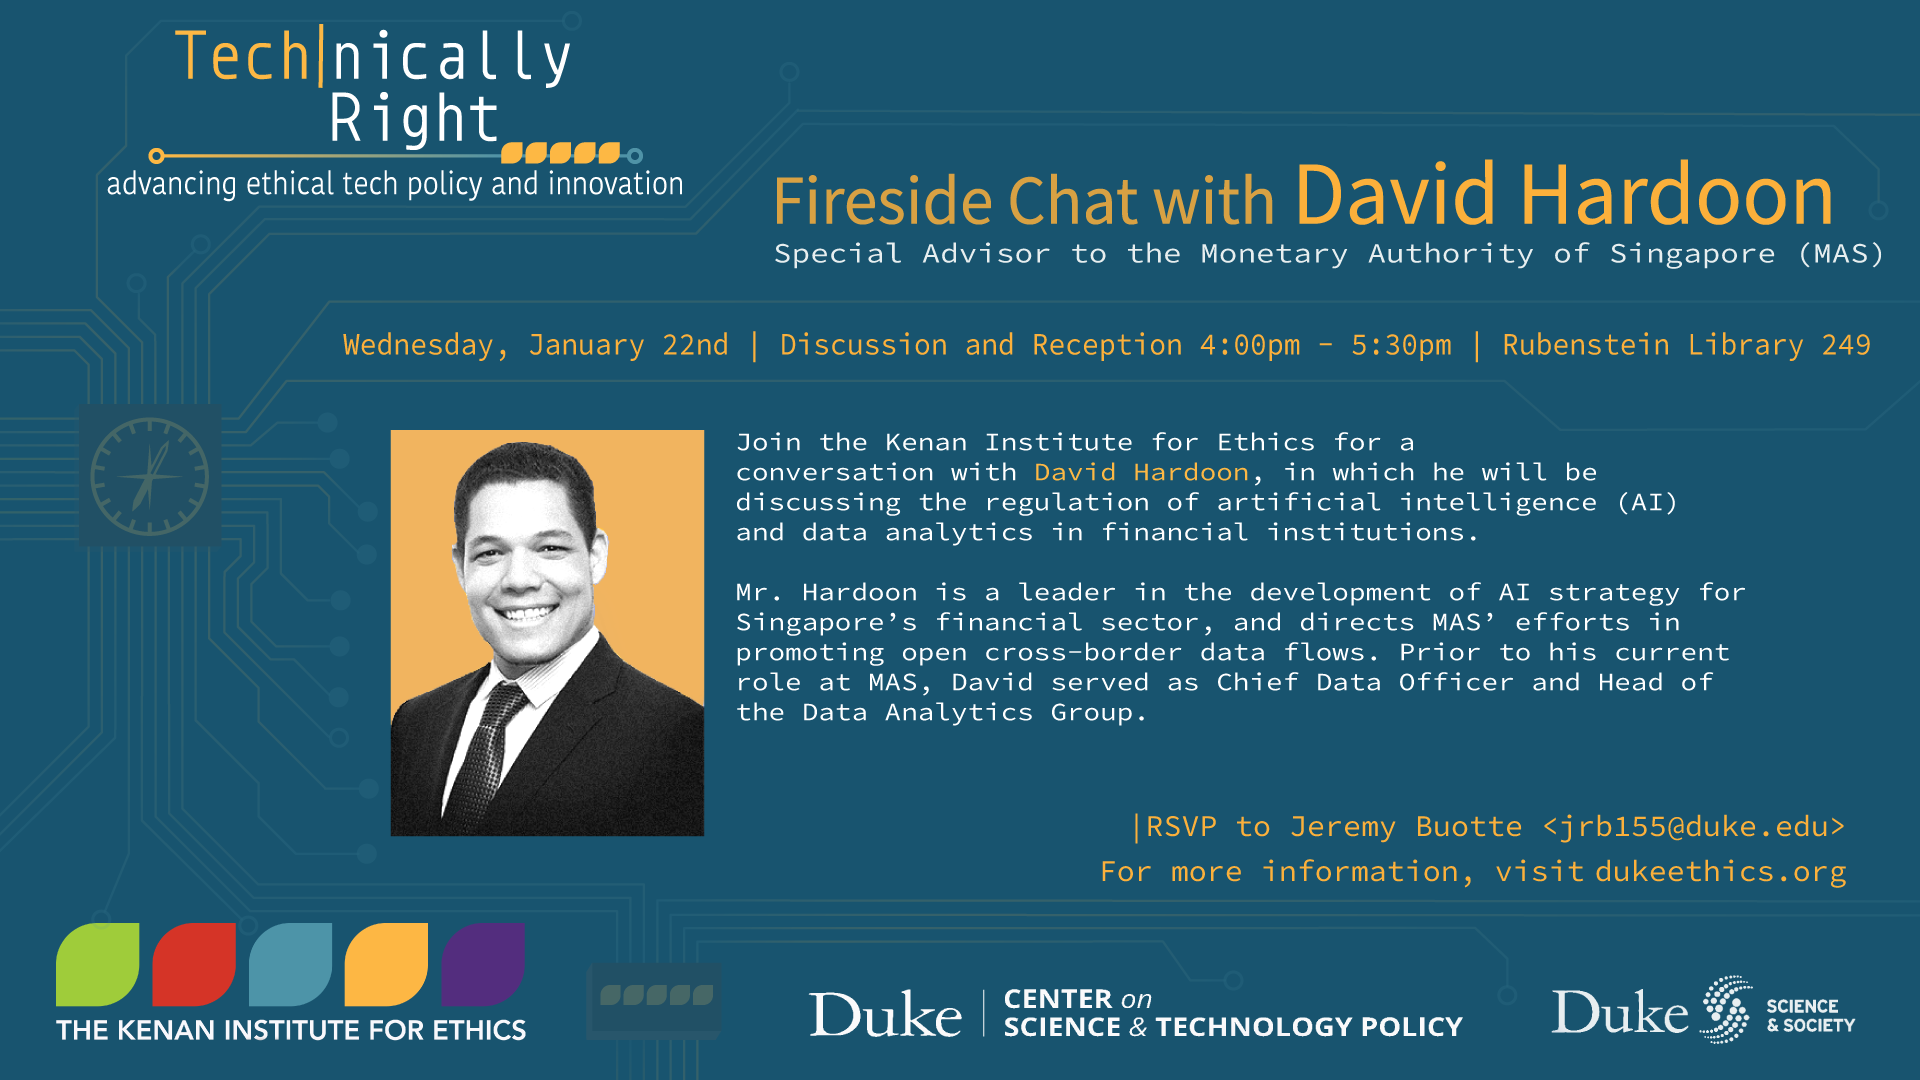 Fireside Chat with David Hardoon - all info below